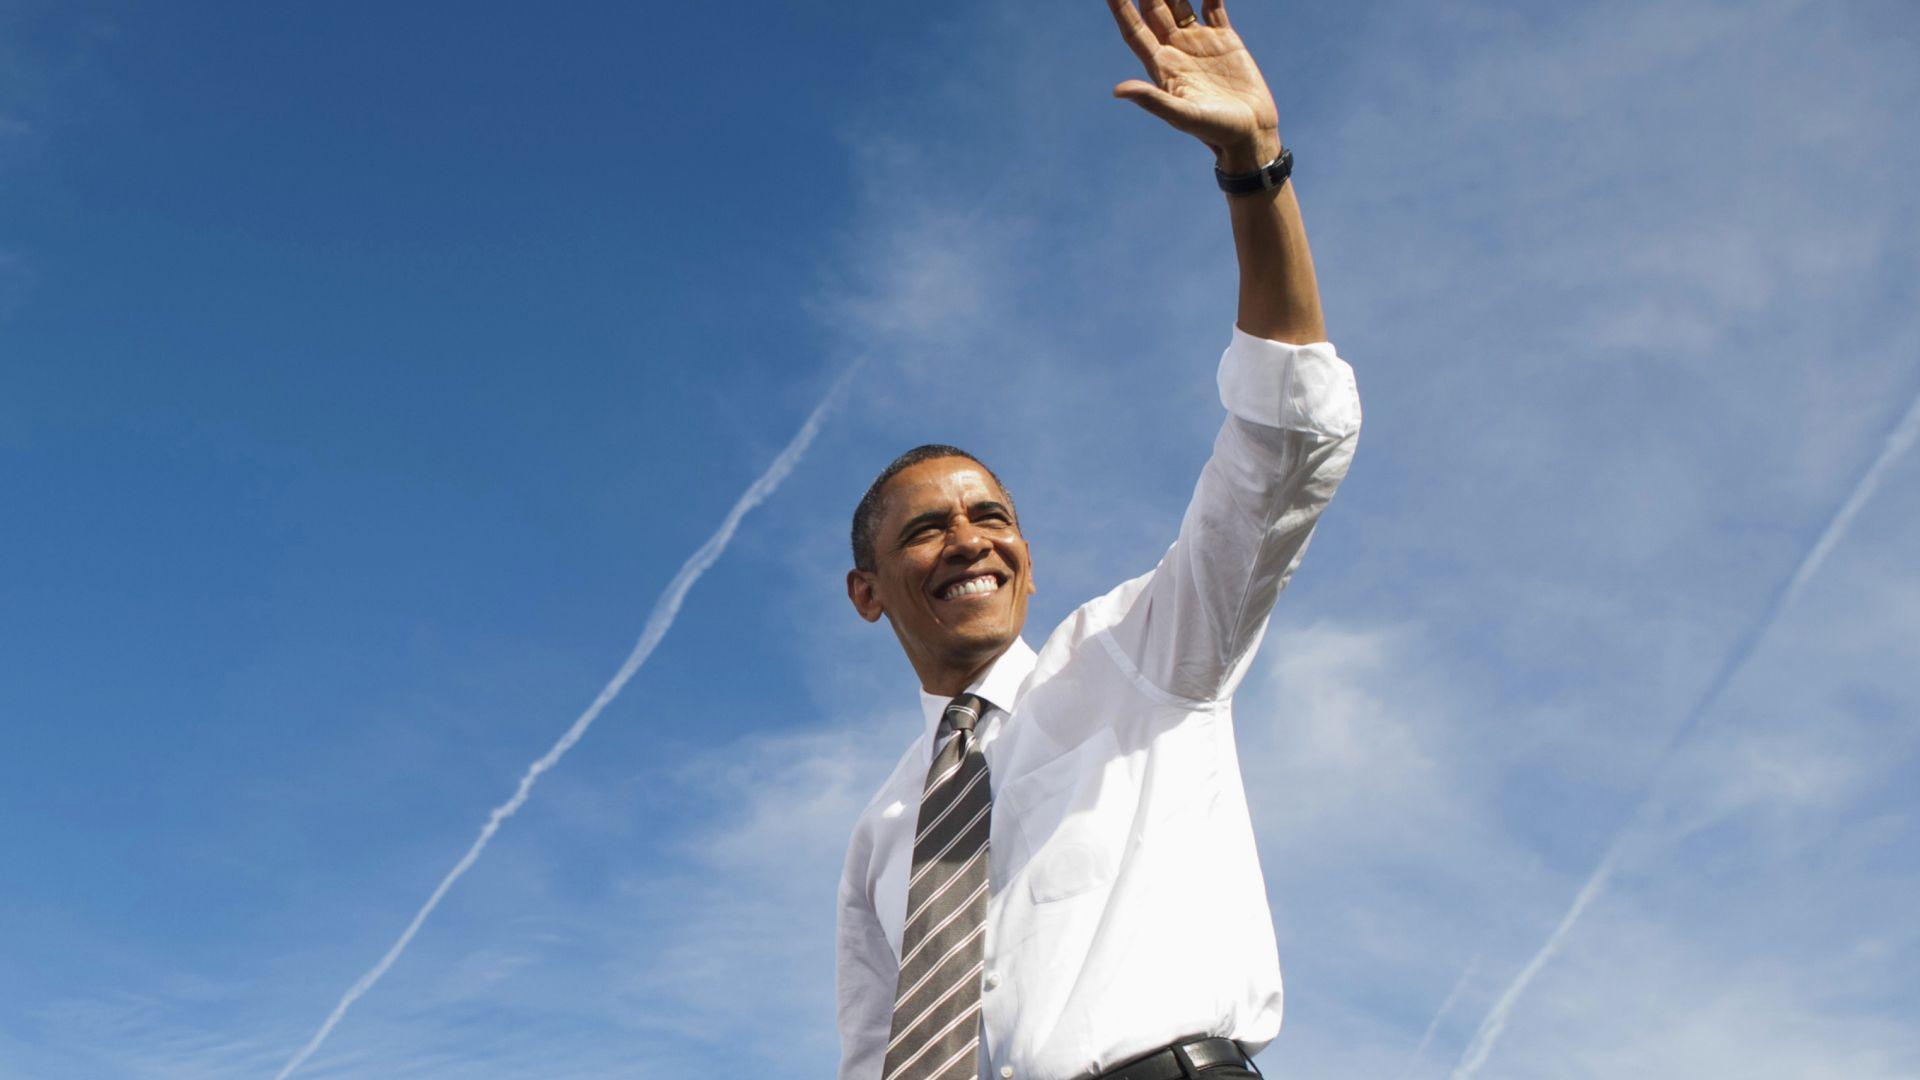 Barack Obama HD Image Photo & Wallpaper Free Download